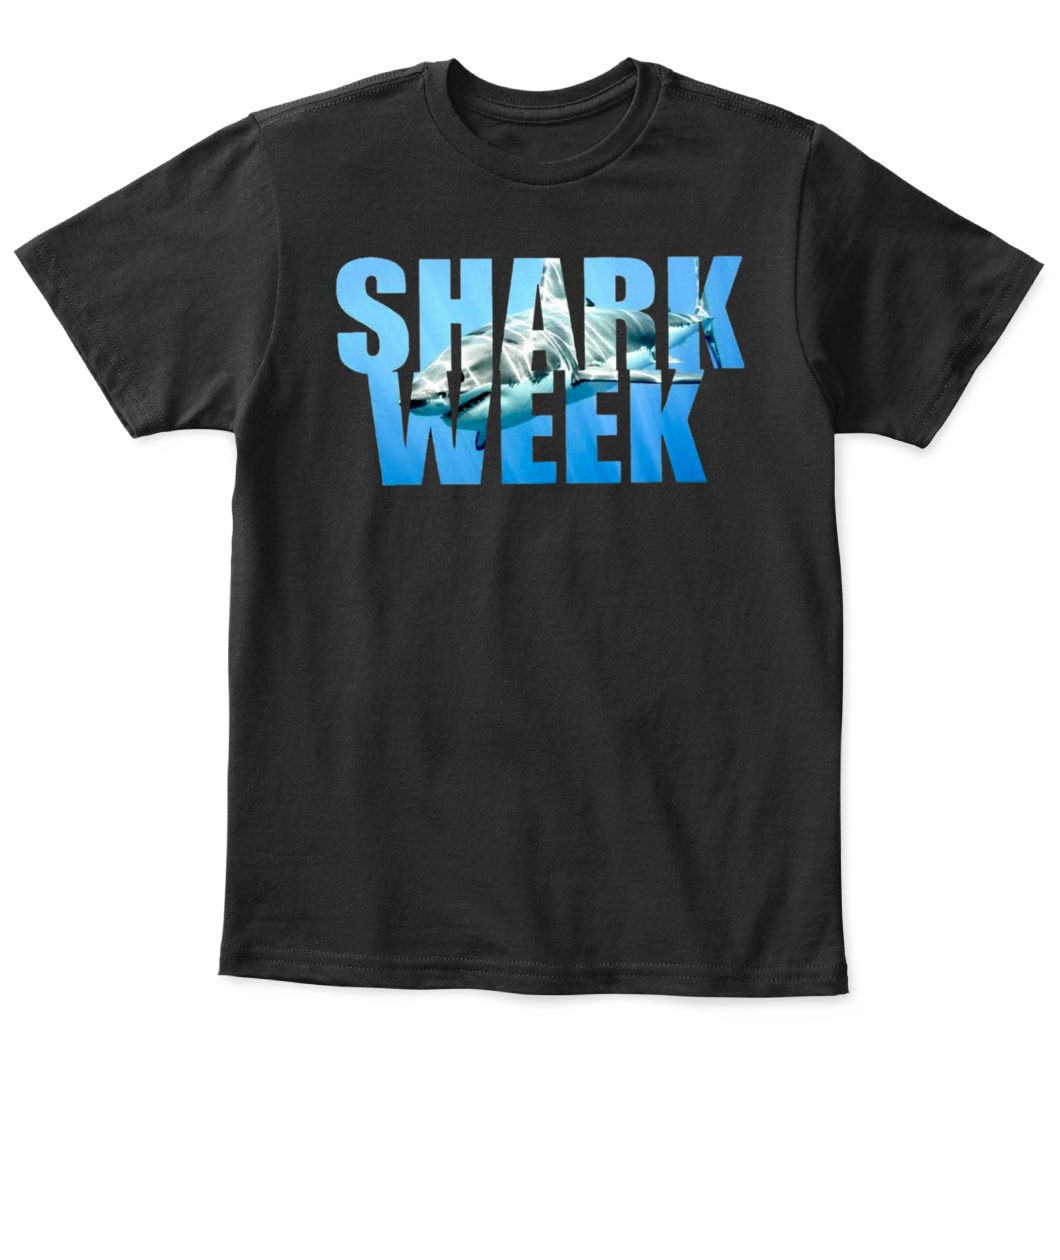 SHARK WEEK SHIRT - Ellie Shirt